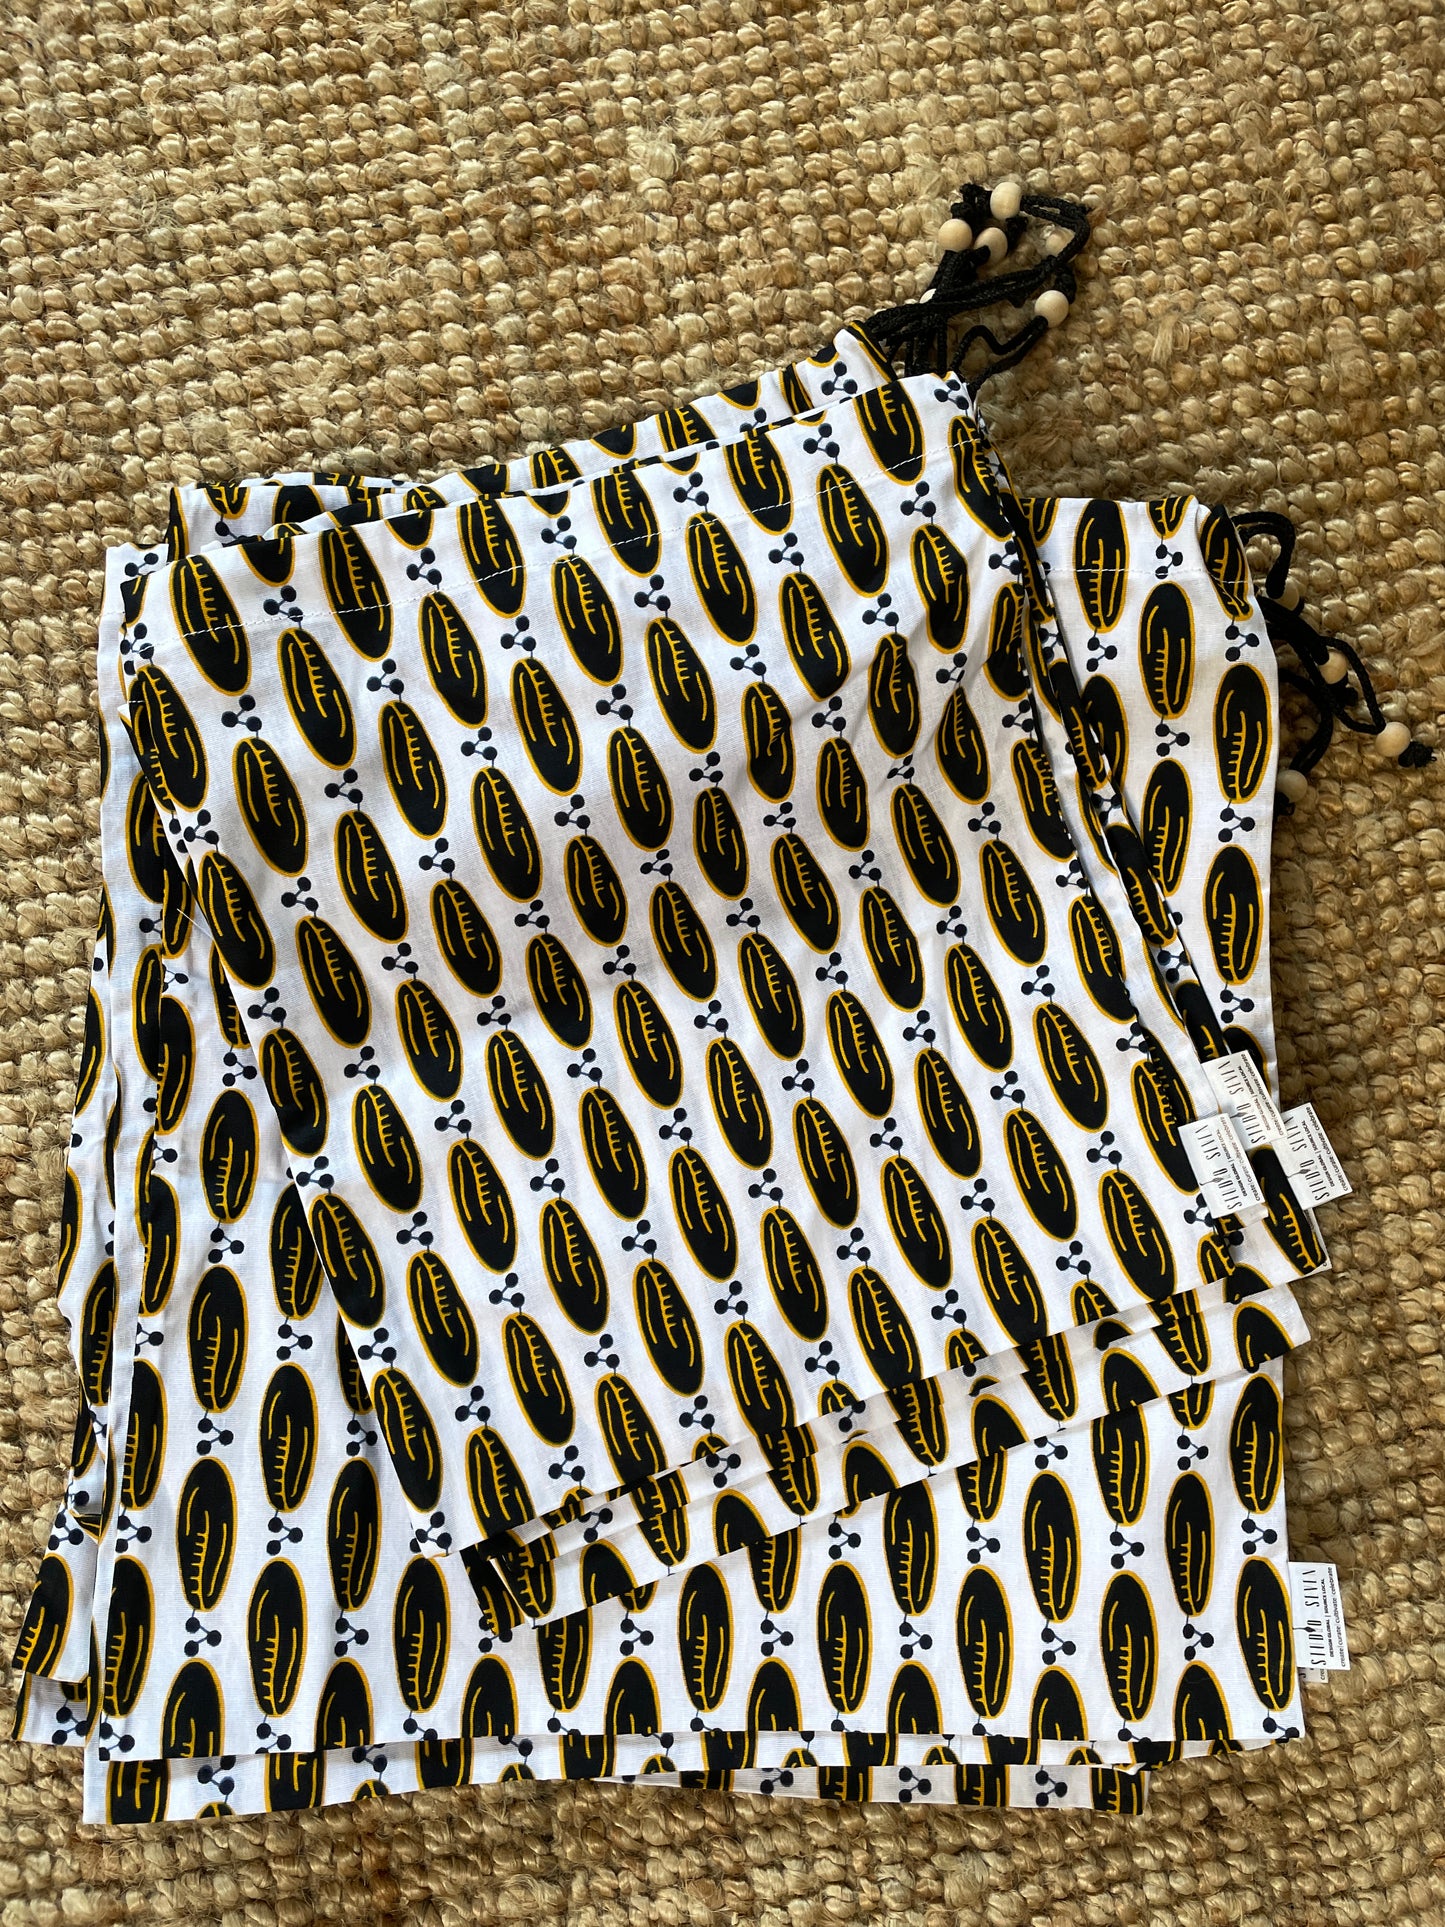 African kitenge fabric - drawstring tote (small - coffee bean print)